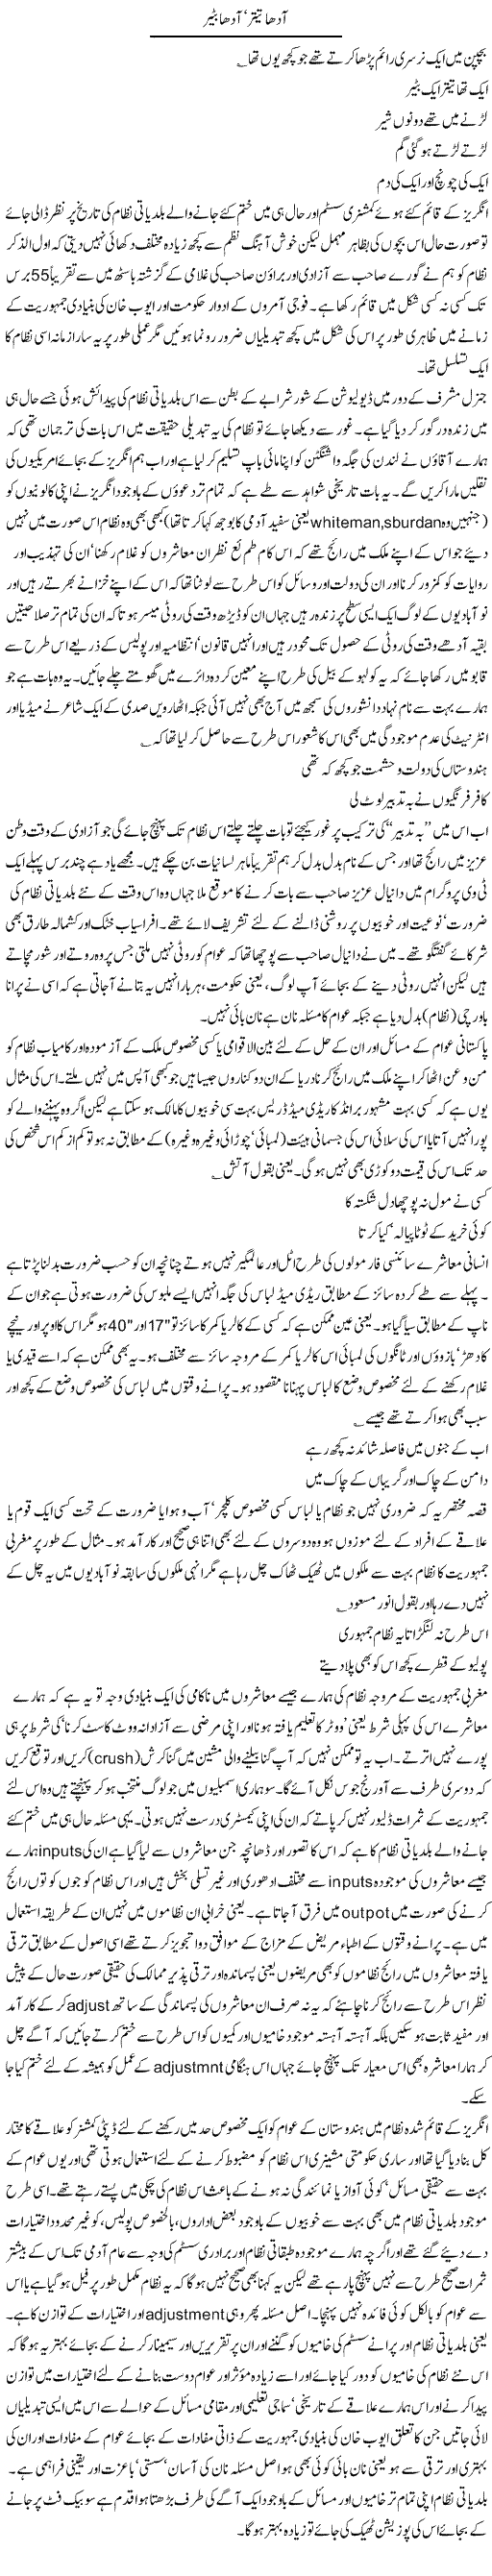 Teetar Bater Express Column Amjad Islam 28 March 2010